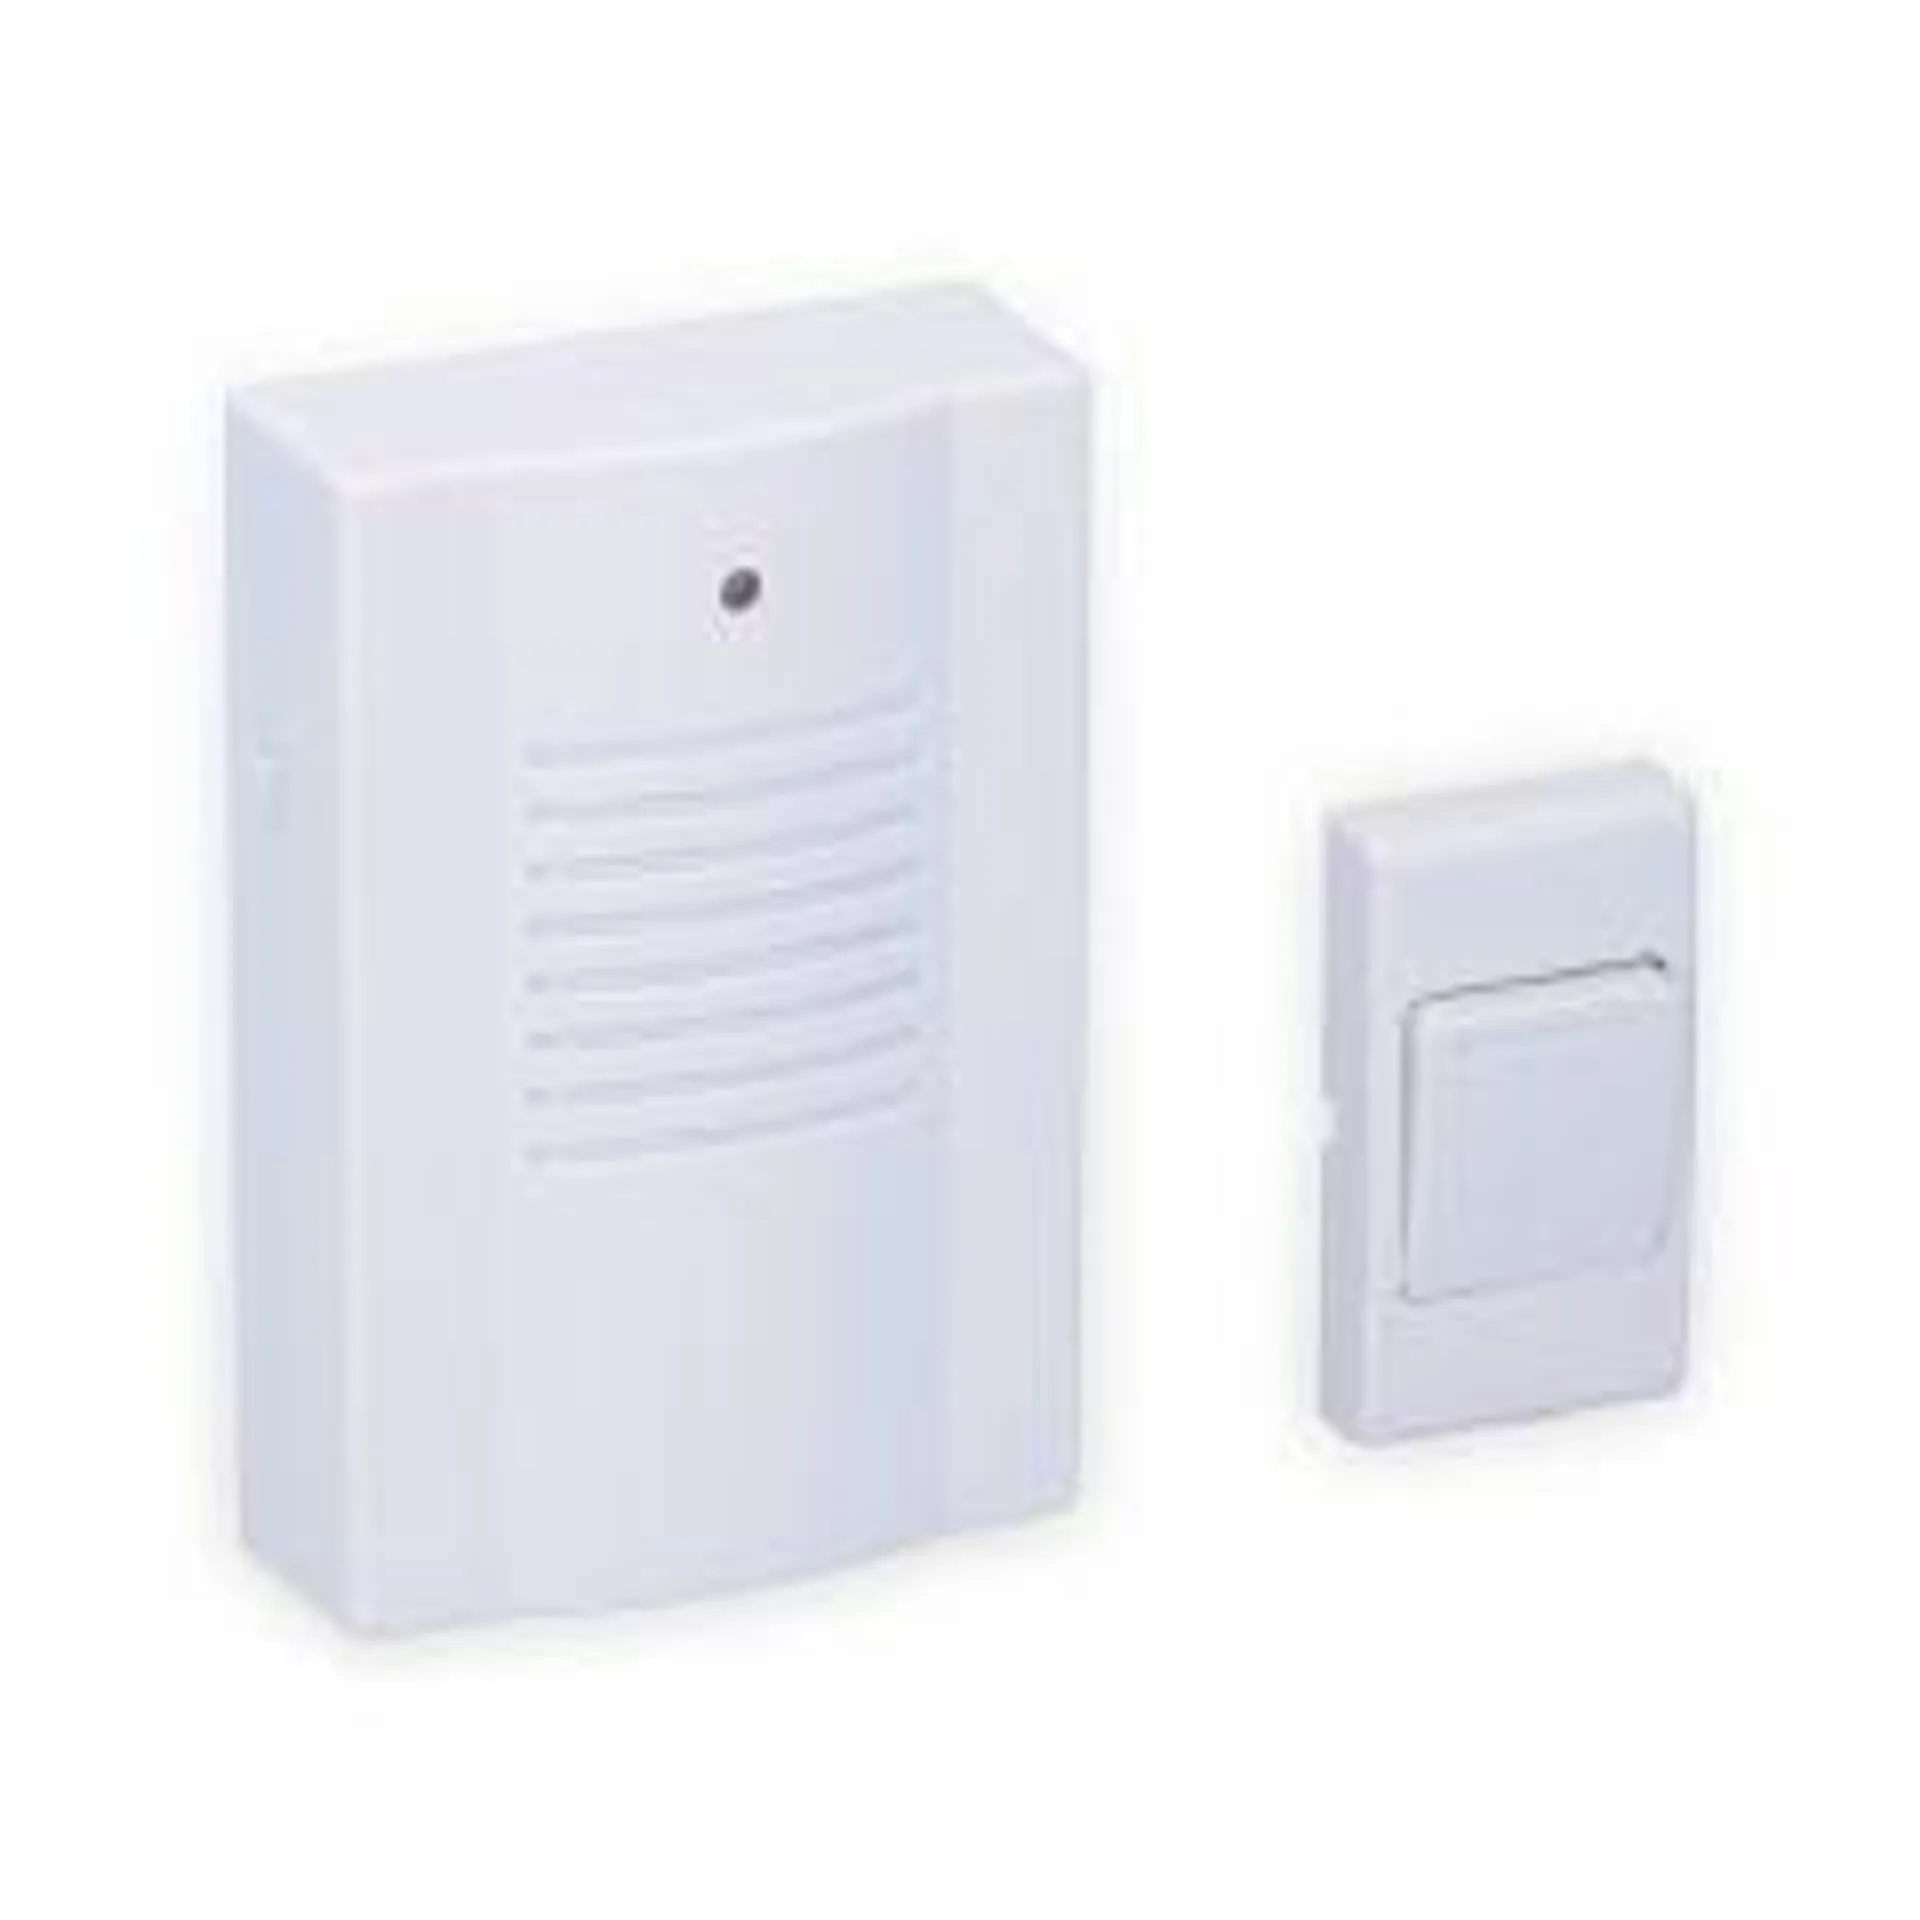 DB-1 Wireless Doorbell